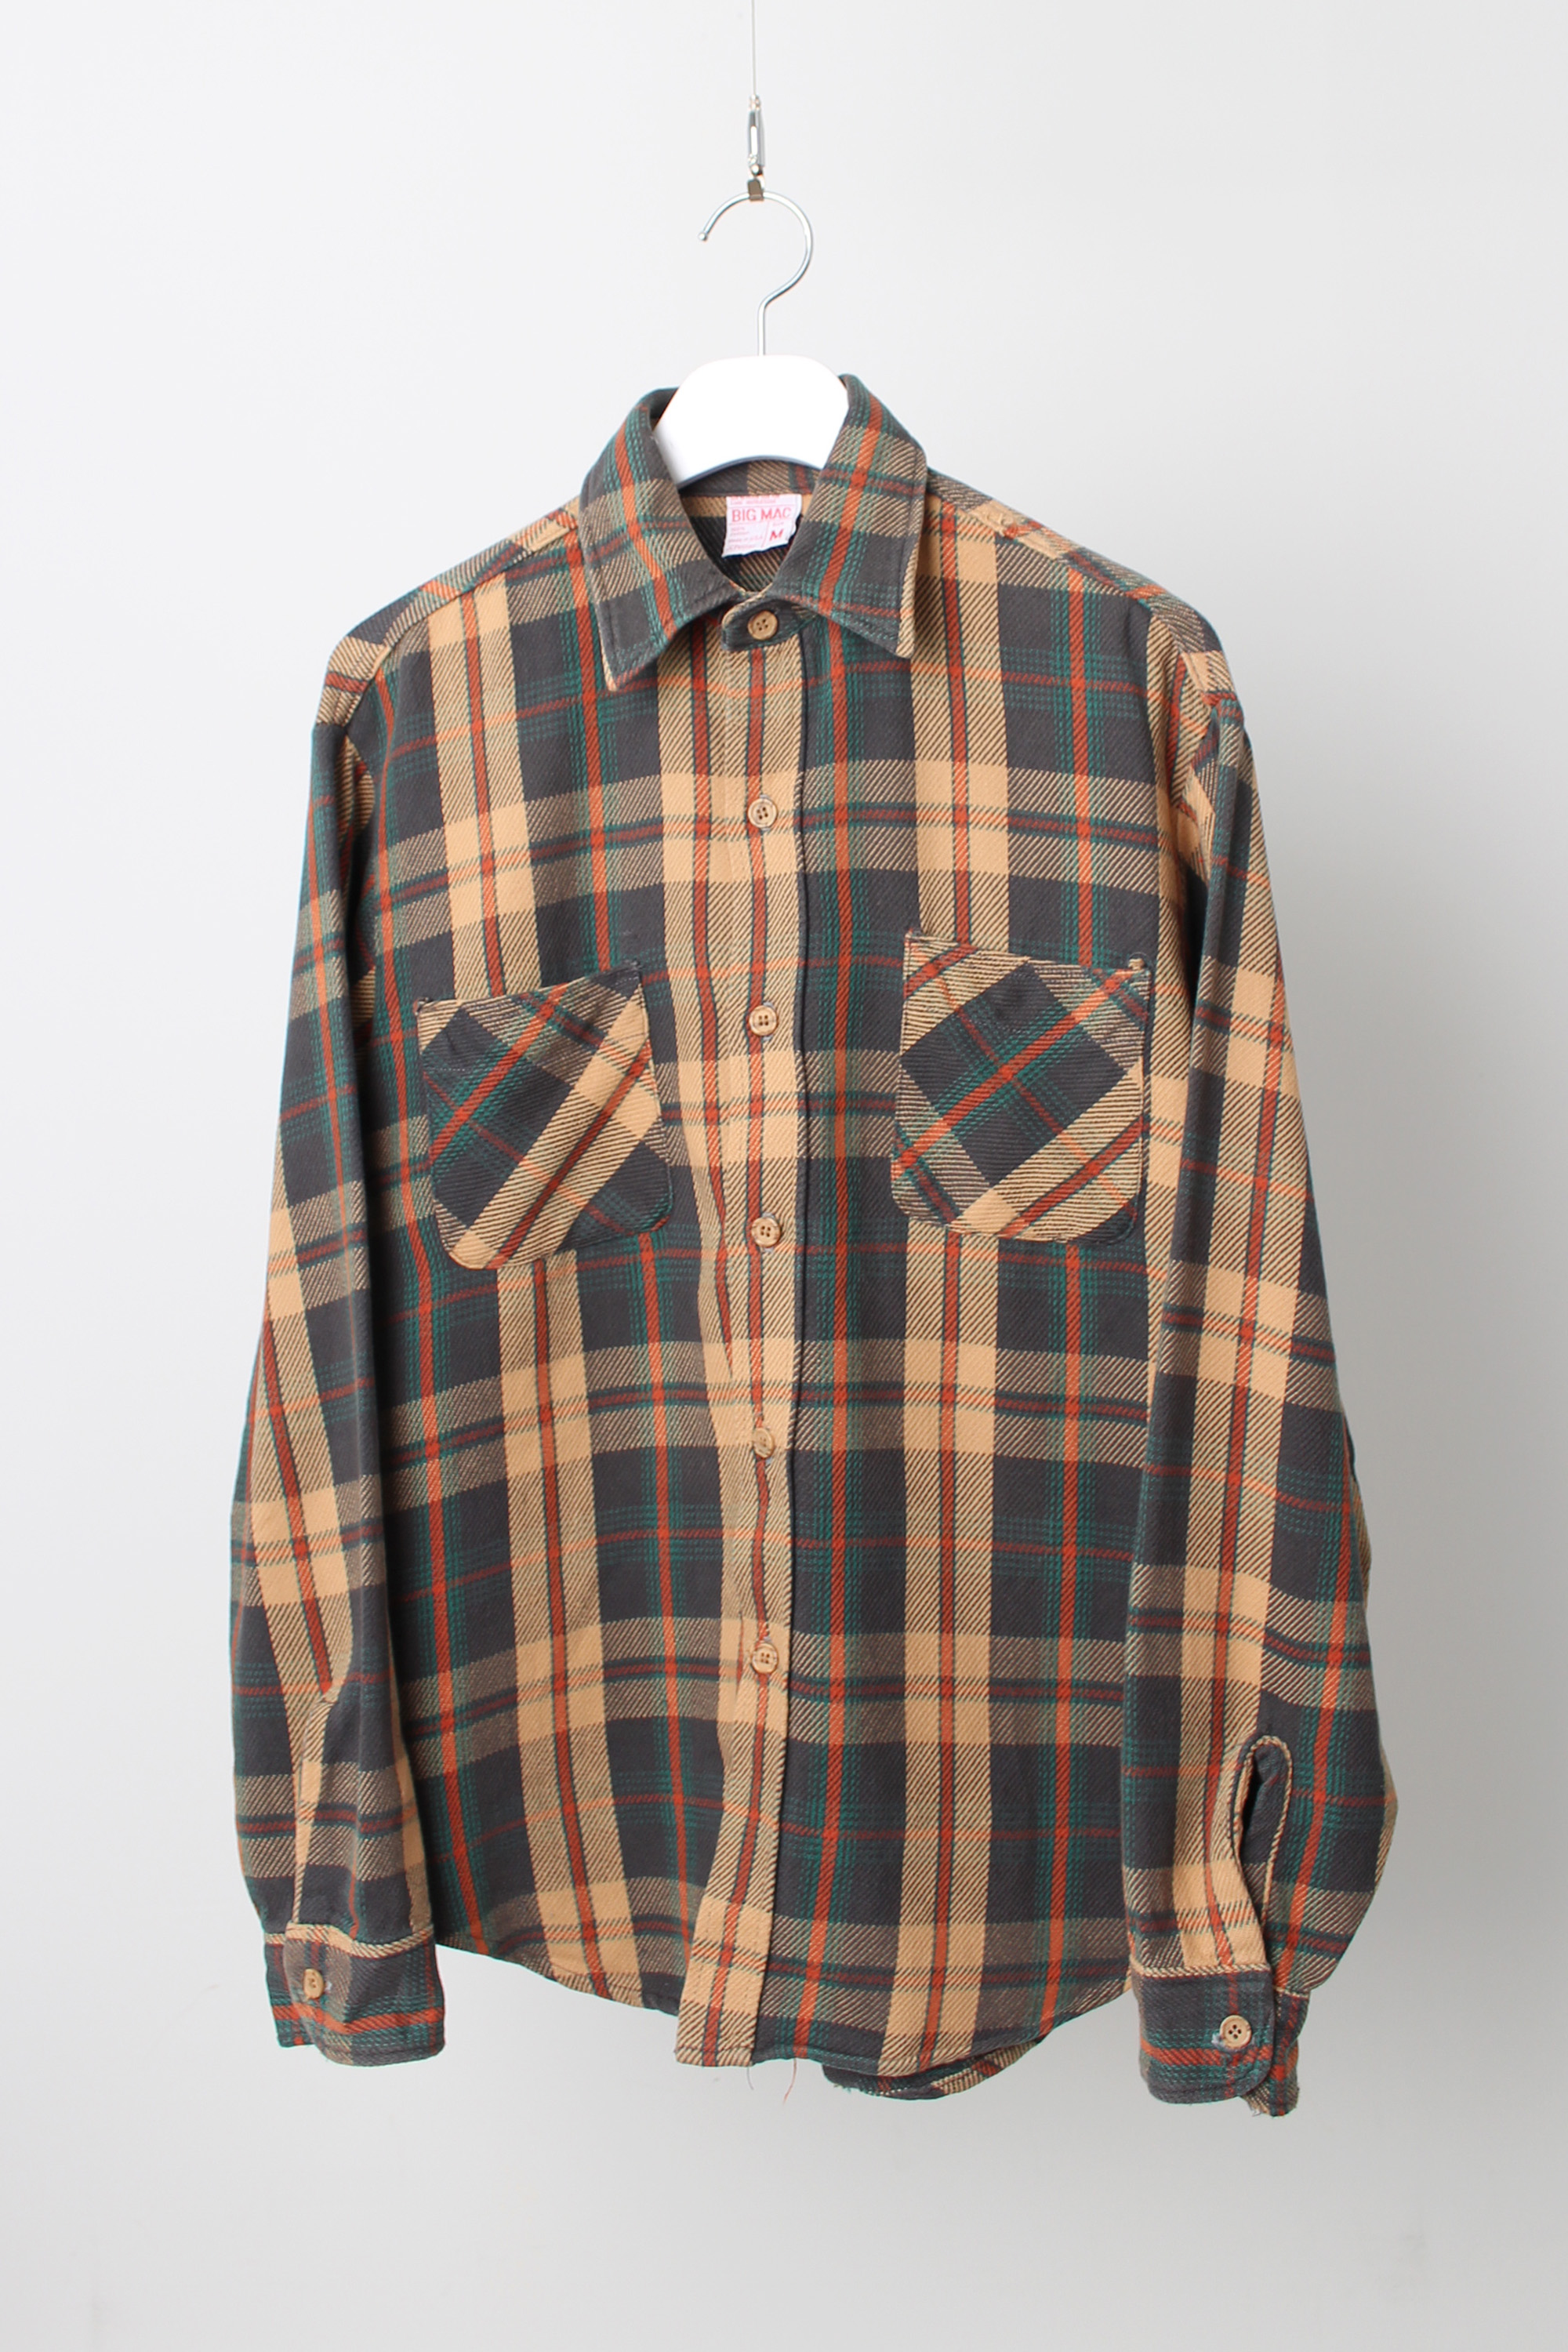 Vintage BIGMAC Flannel Shirt